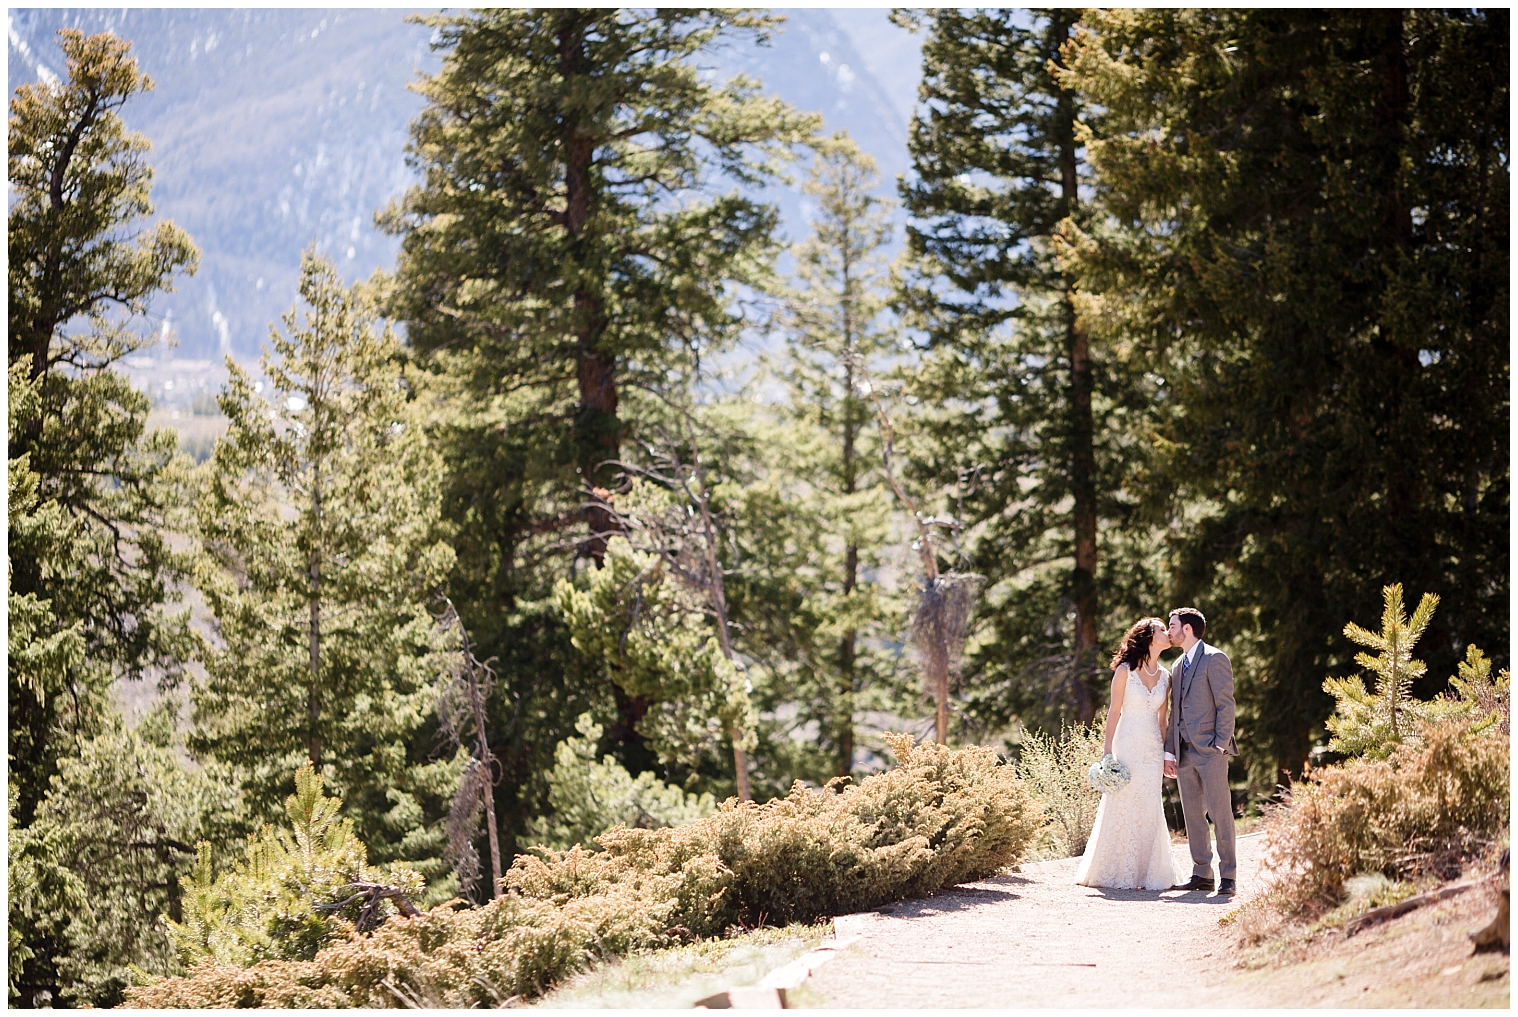 The wedding couple kiss while walking down a path at their Breckenridge elopement.